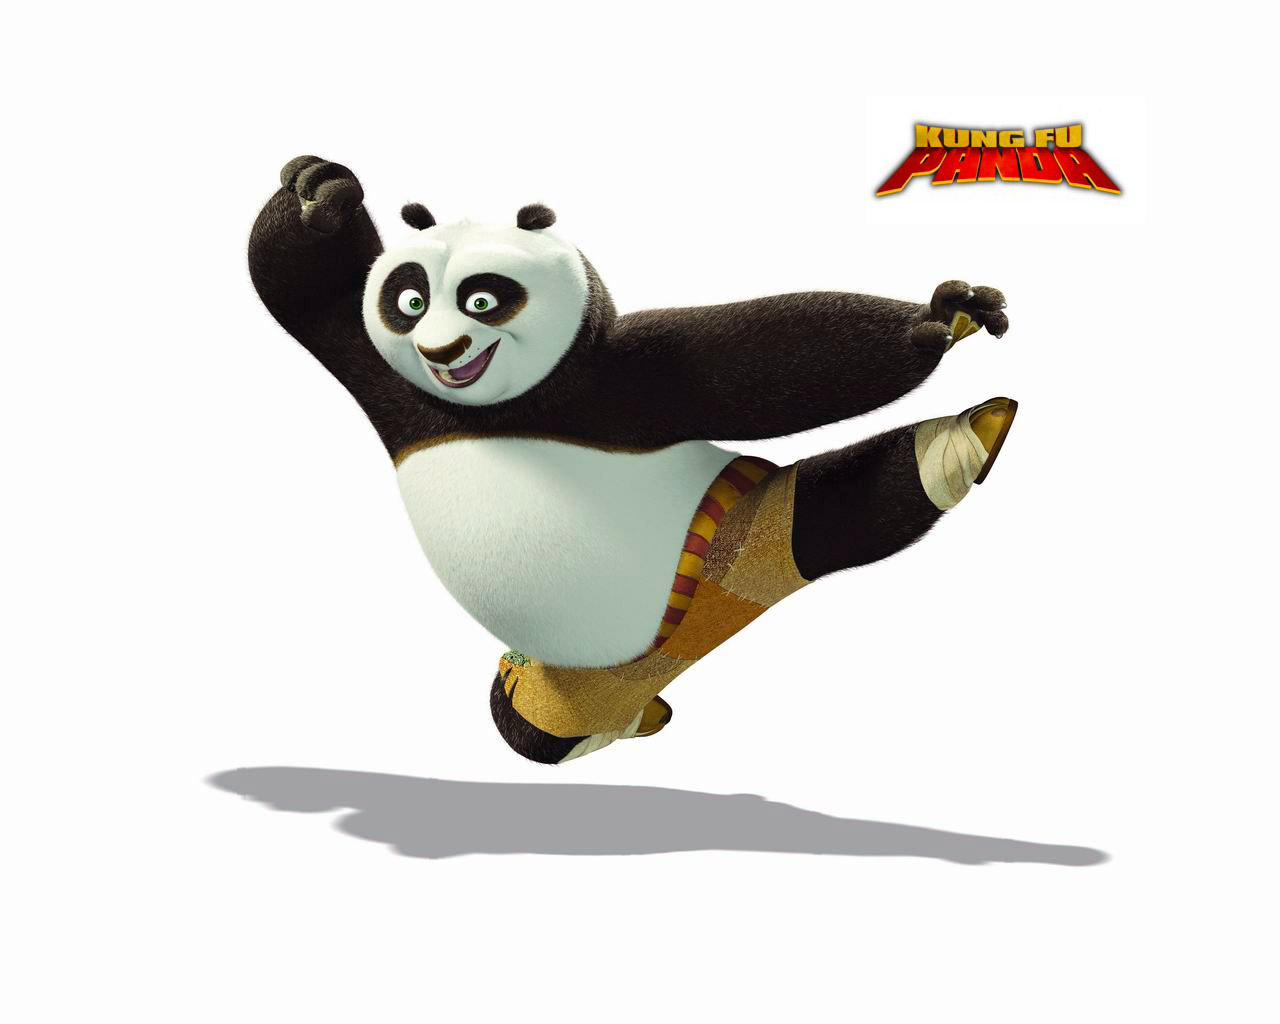 KungFu Panda 3D Animation Wallpapers   HD Wallpapers 80287